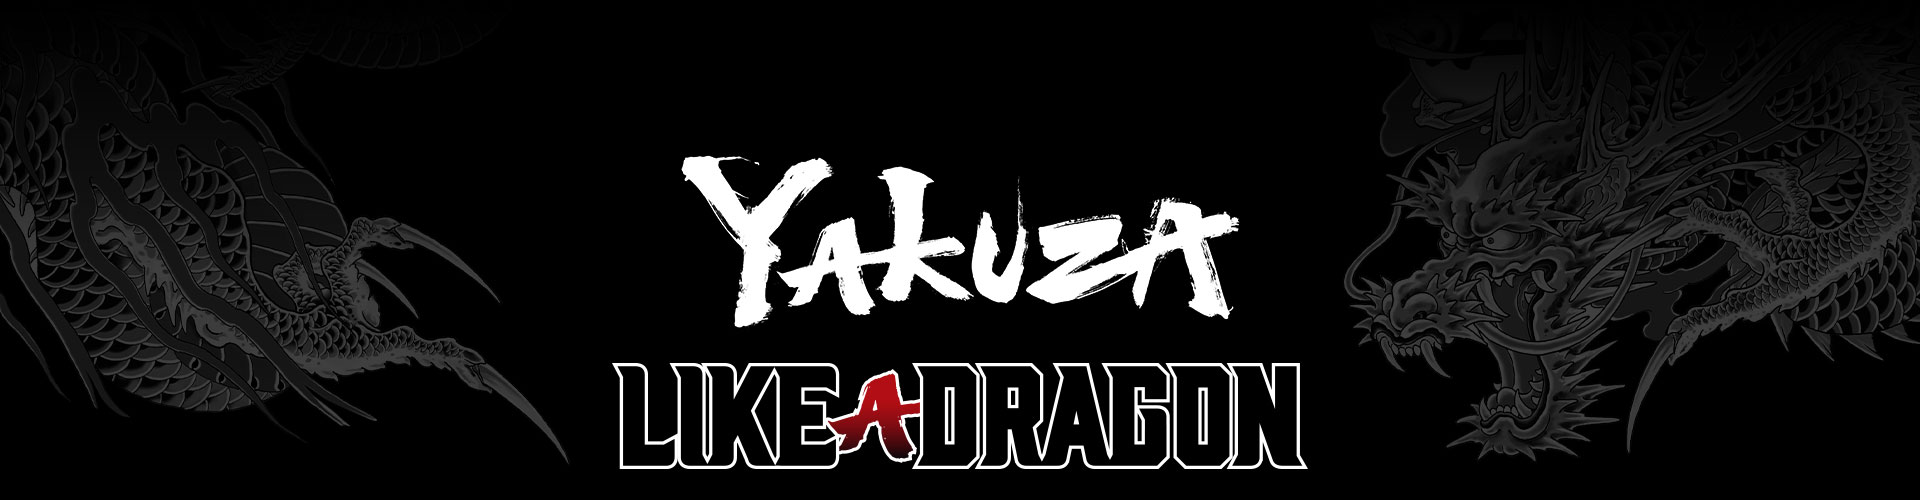 Logo de la franchise Yakuza Like a Dragon avec un arrière-plan de tatouage de dragon gris stylisé.